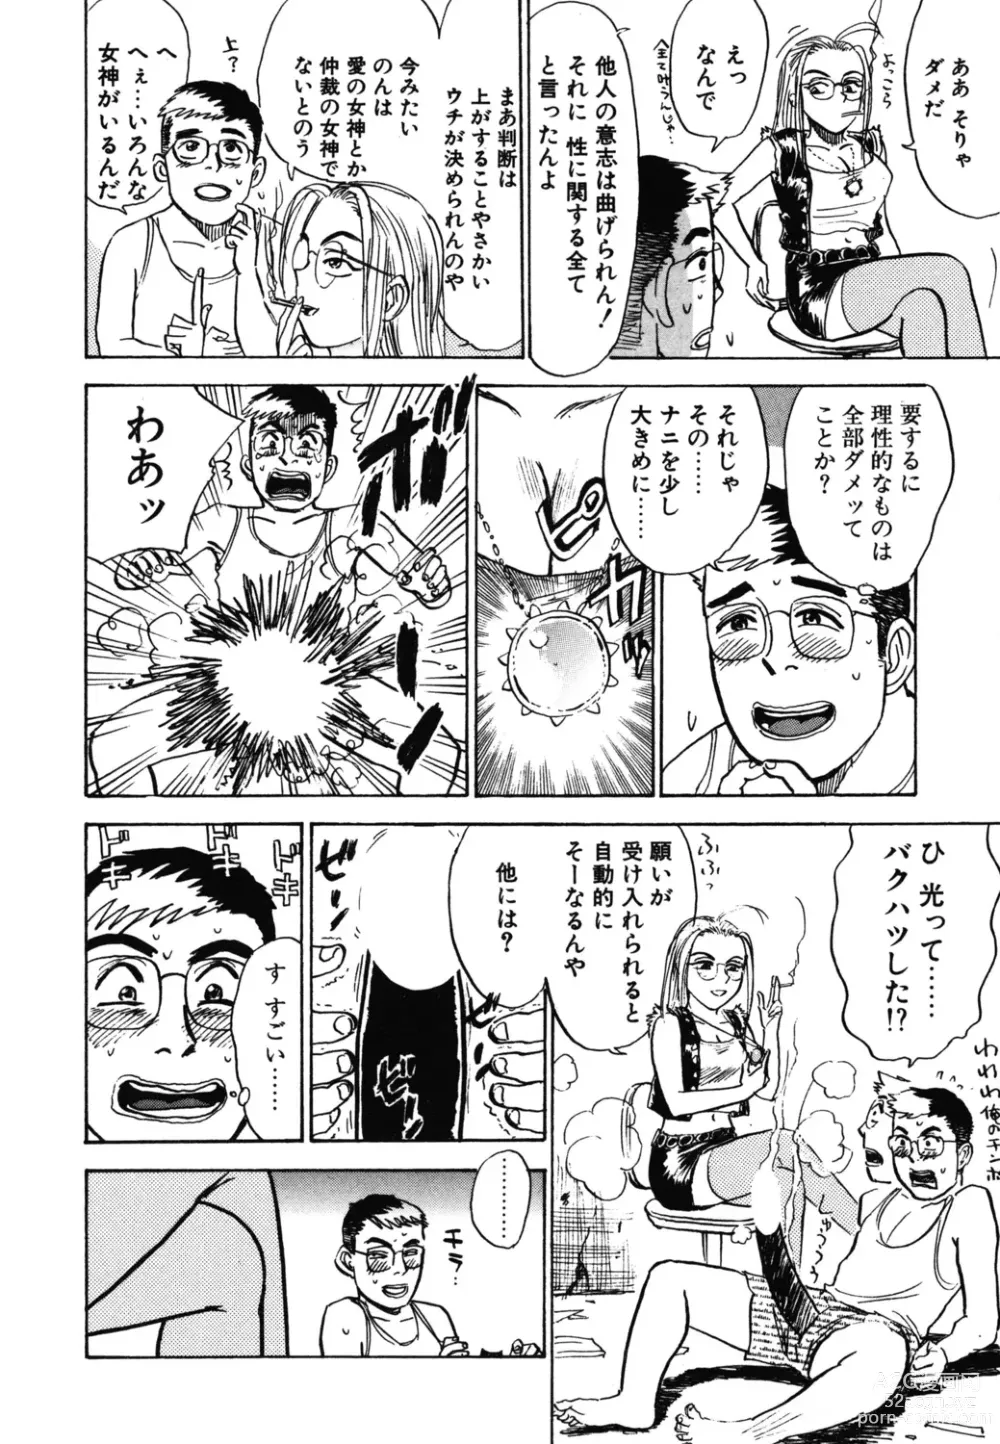 Page 170 of manga Abunai Reiko Sensei 1